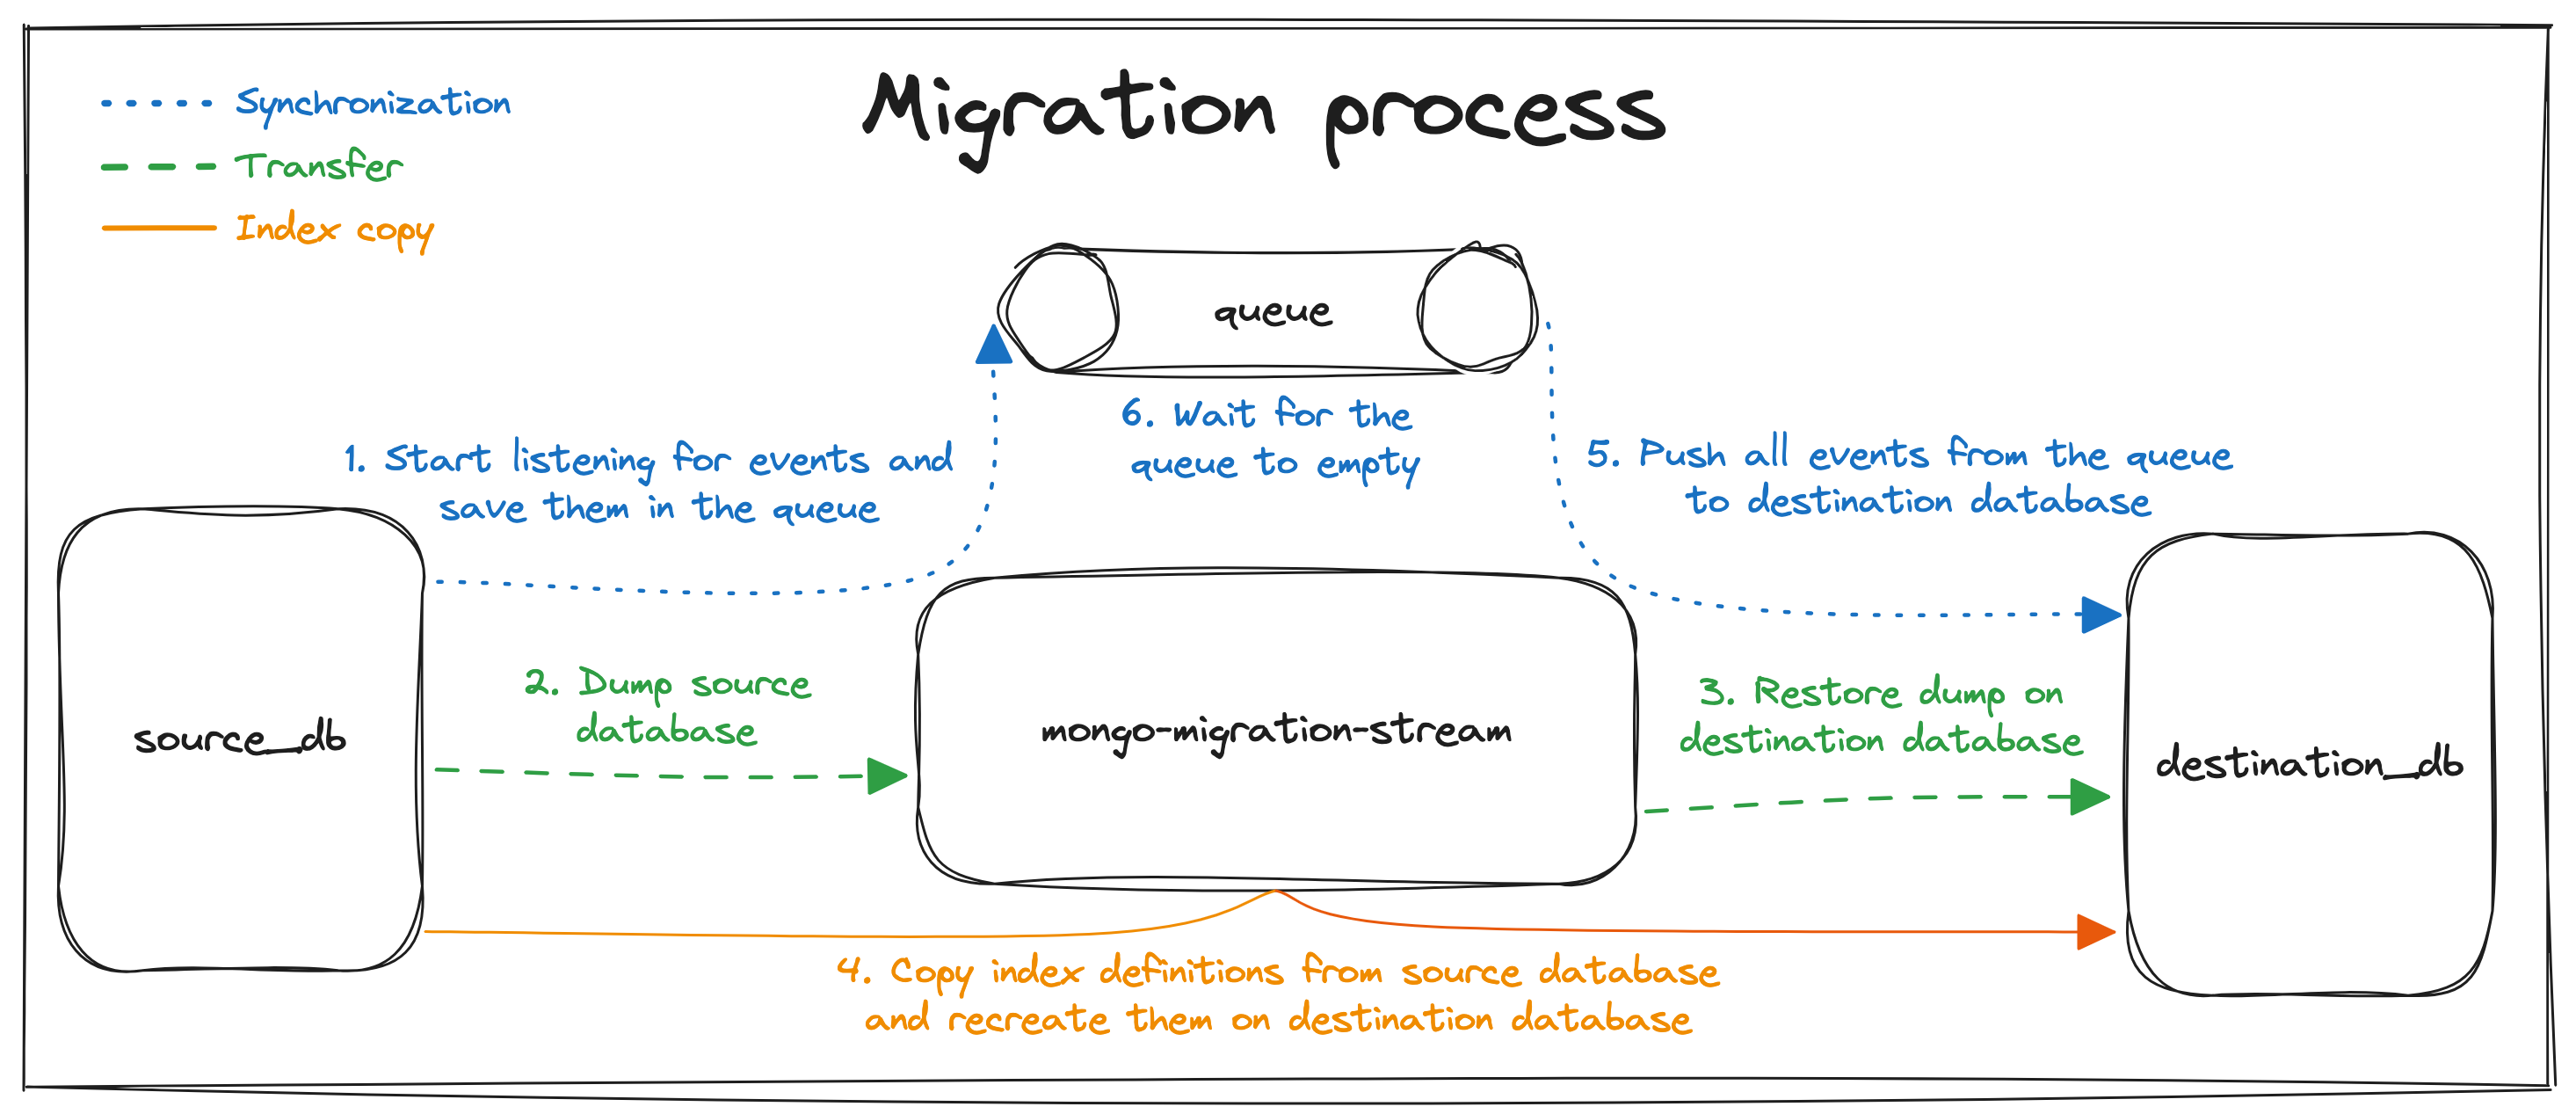 Migration process